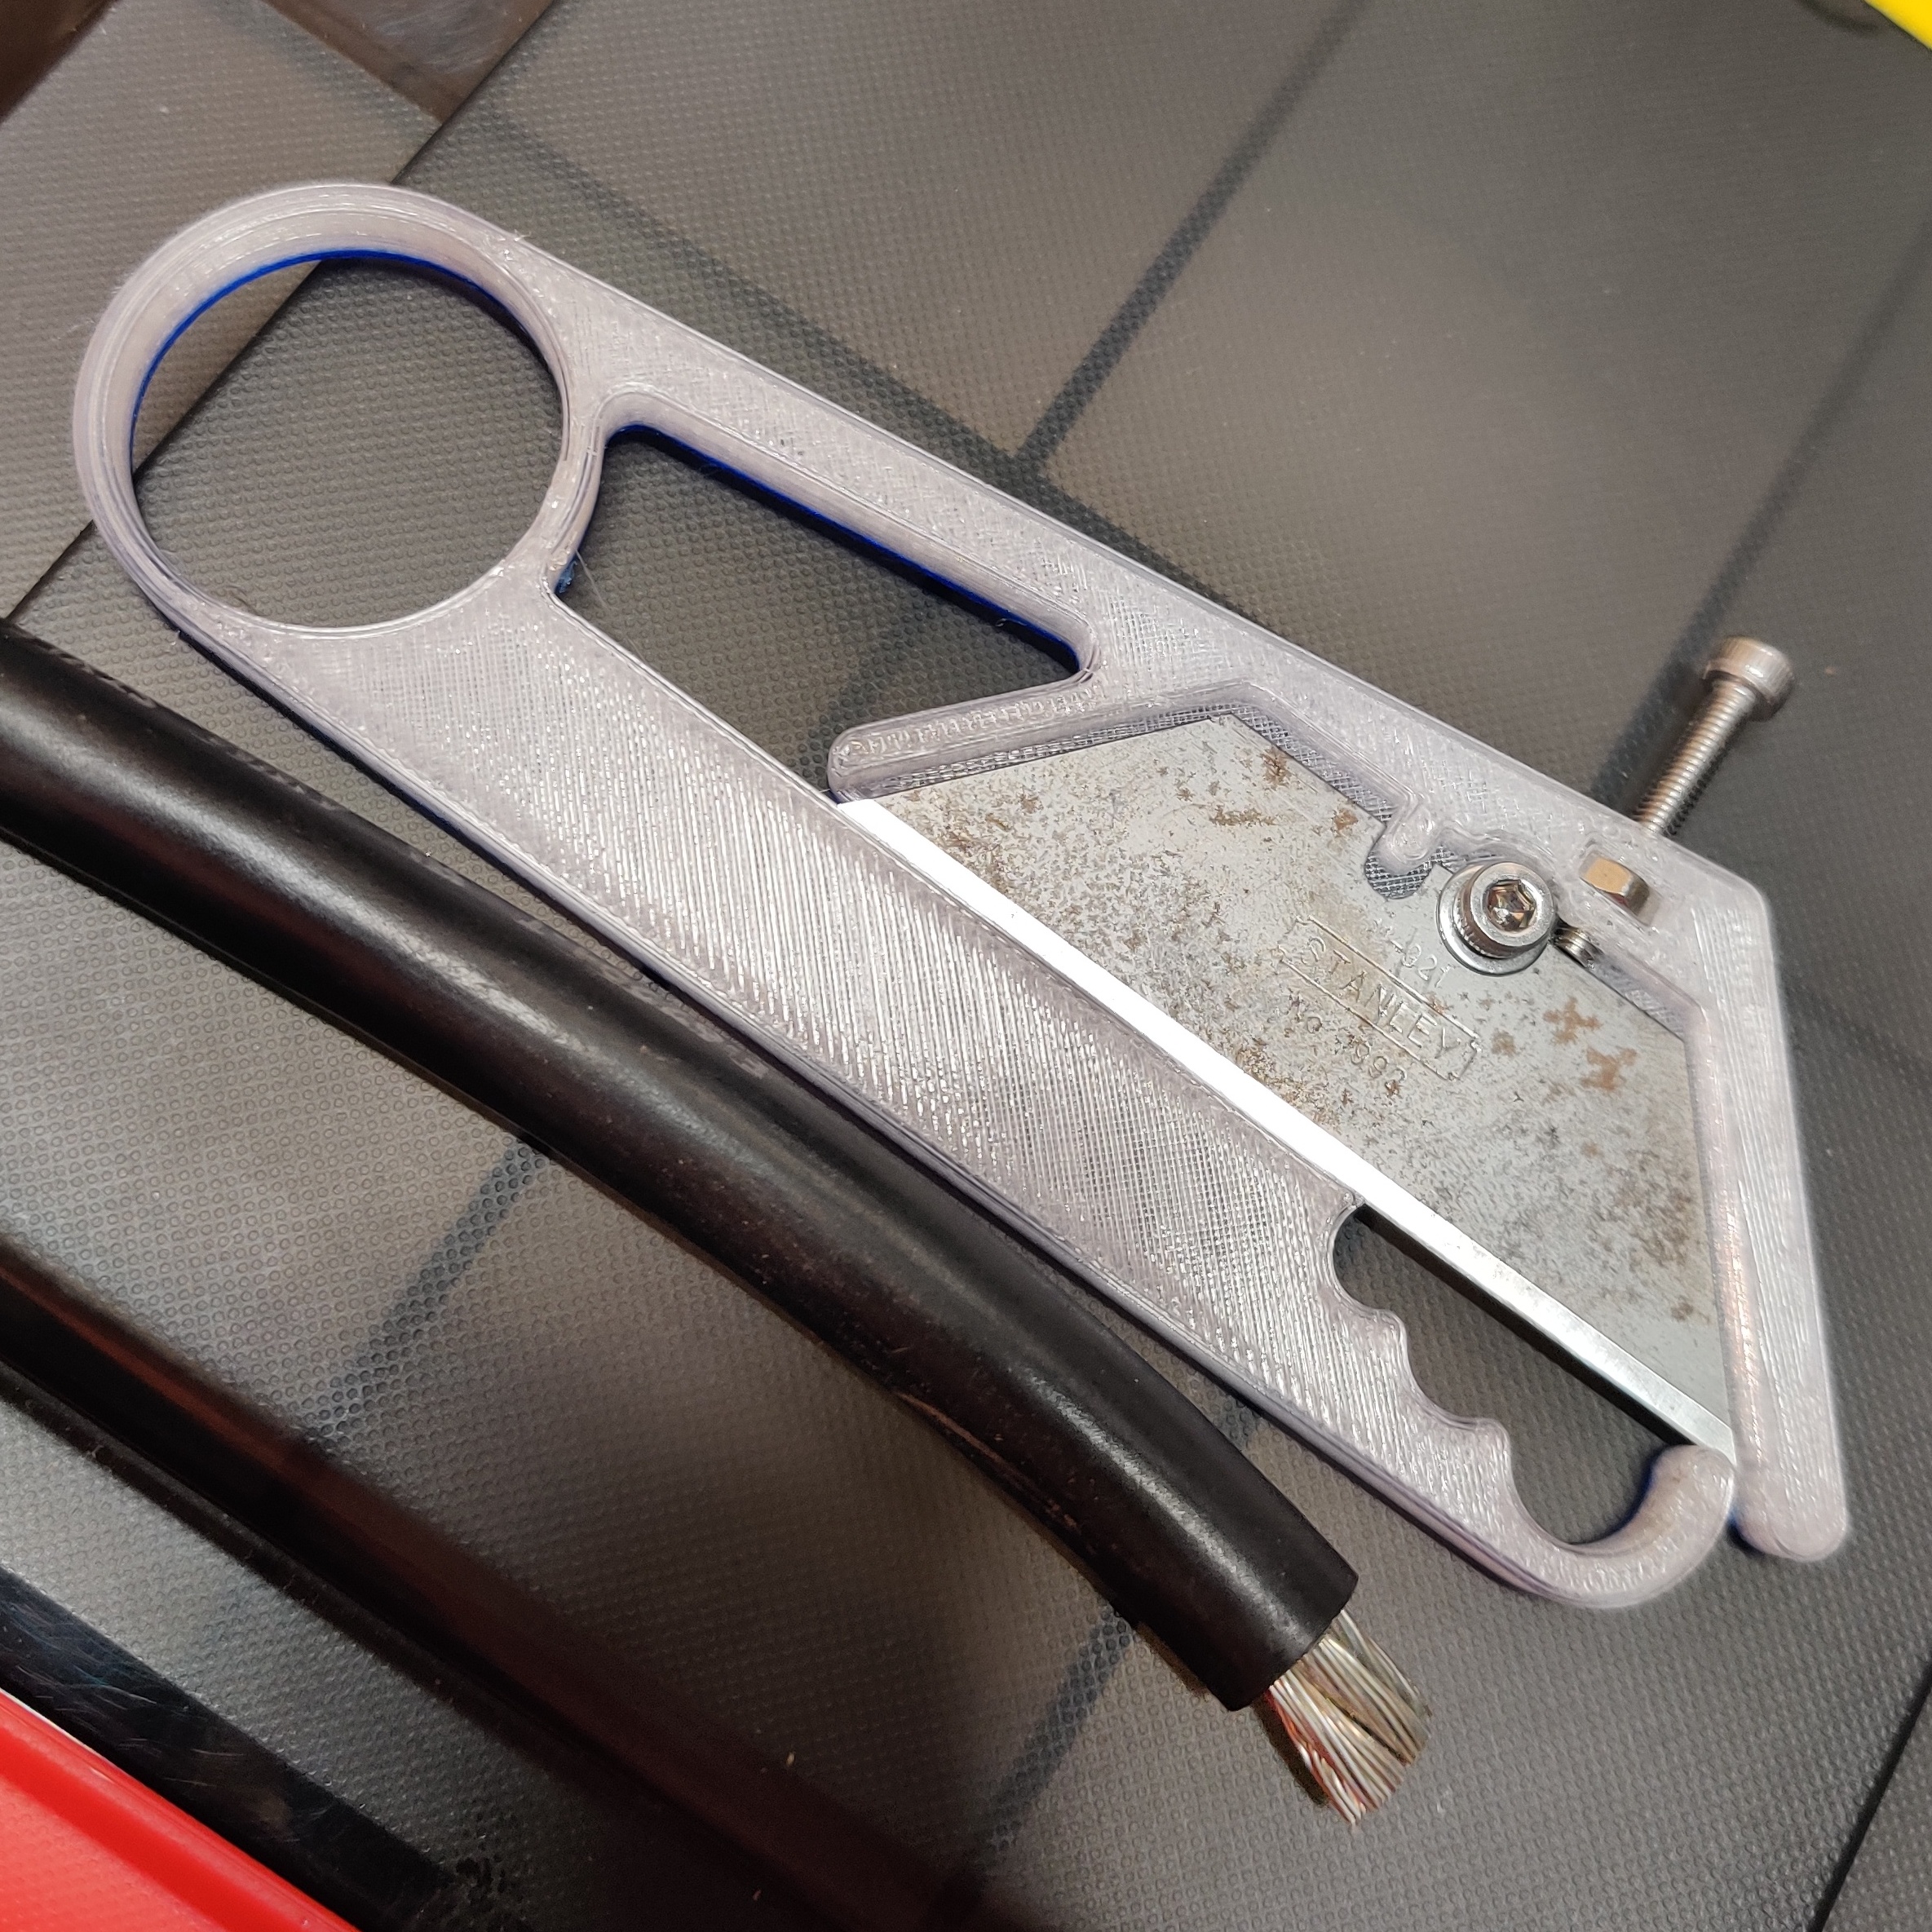 Adjustable wire stripper for Stanley utility blade